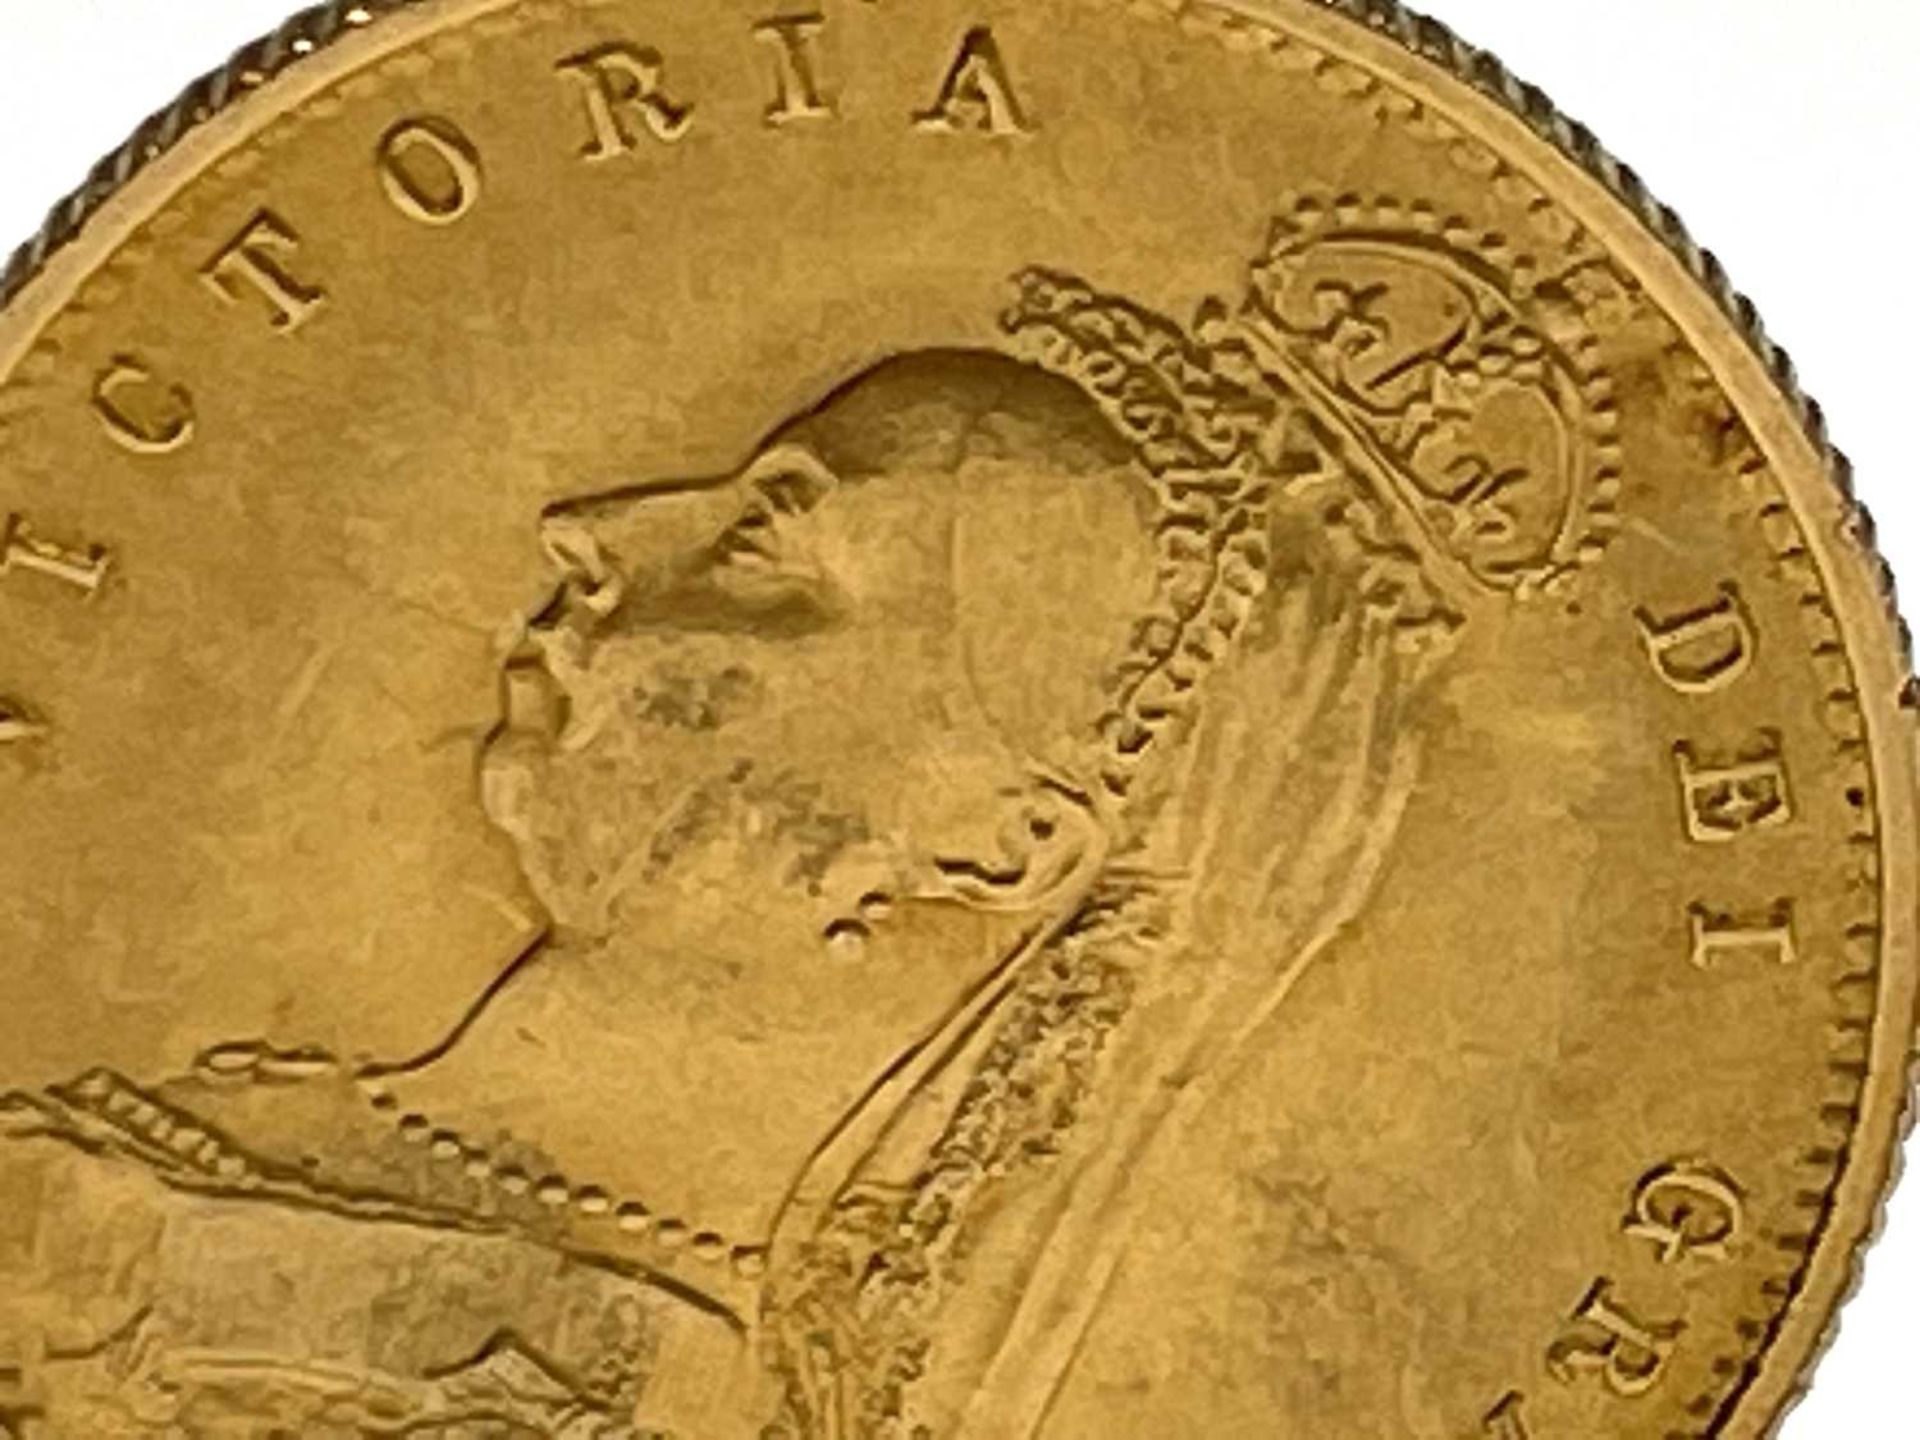 Great Britain Gold Half Sovereign 1887 Queen Victoria Shield Jubilee head UNC Condition: please - Image 5 of 6